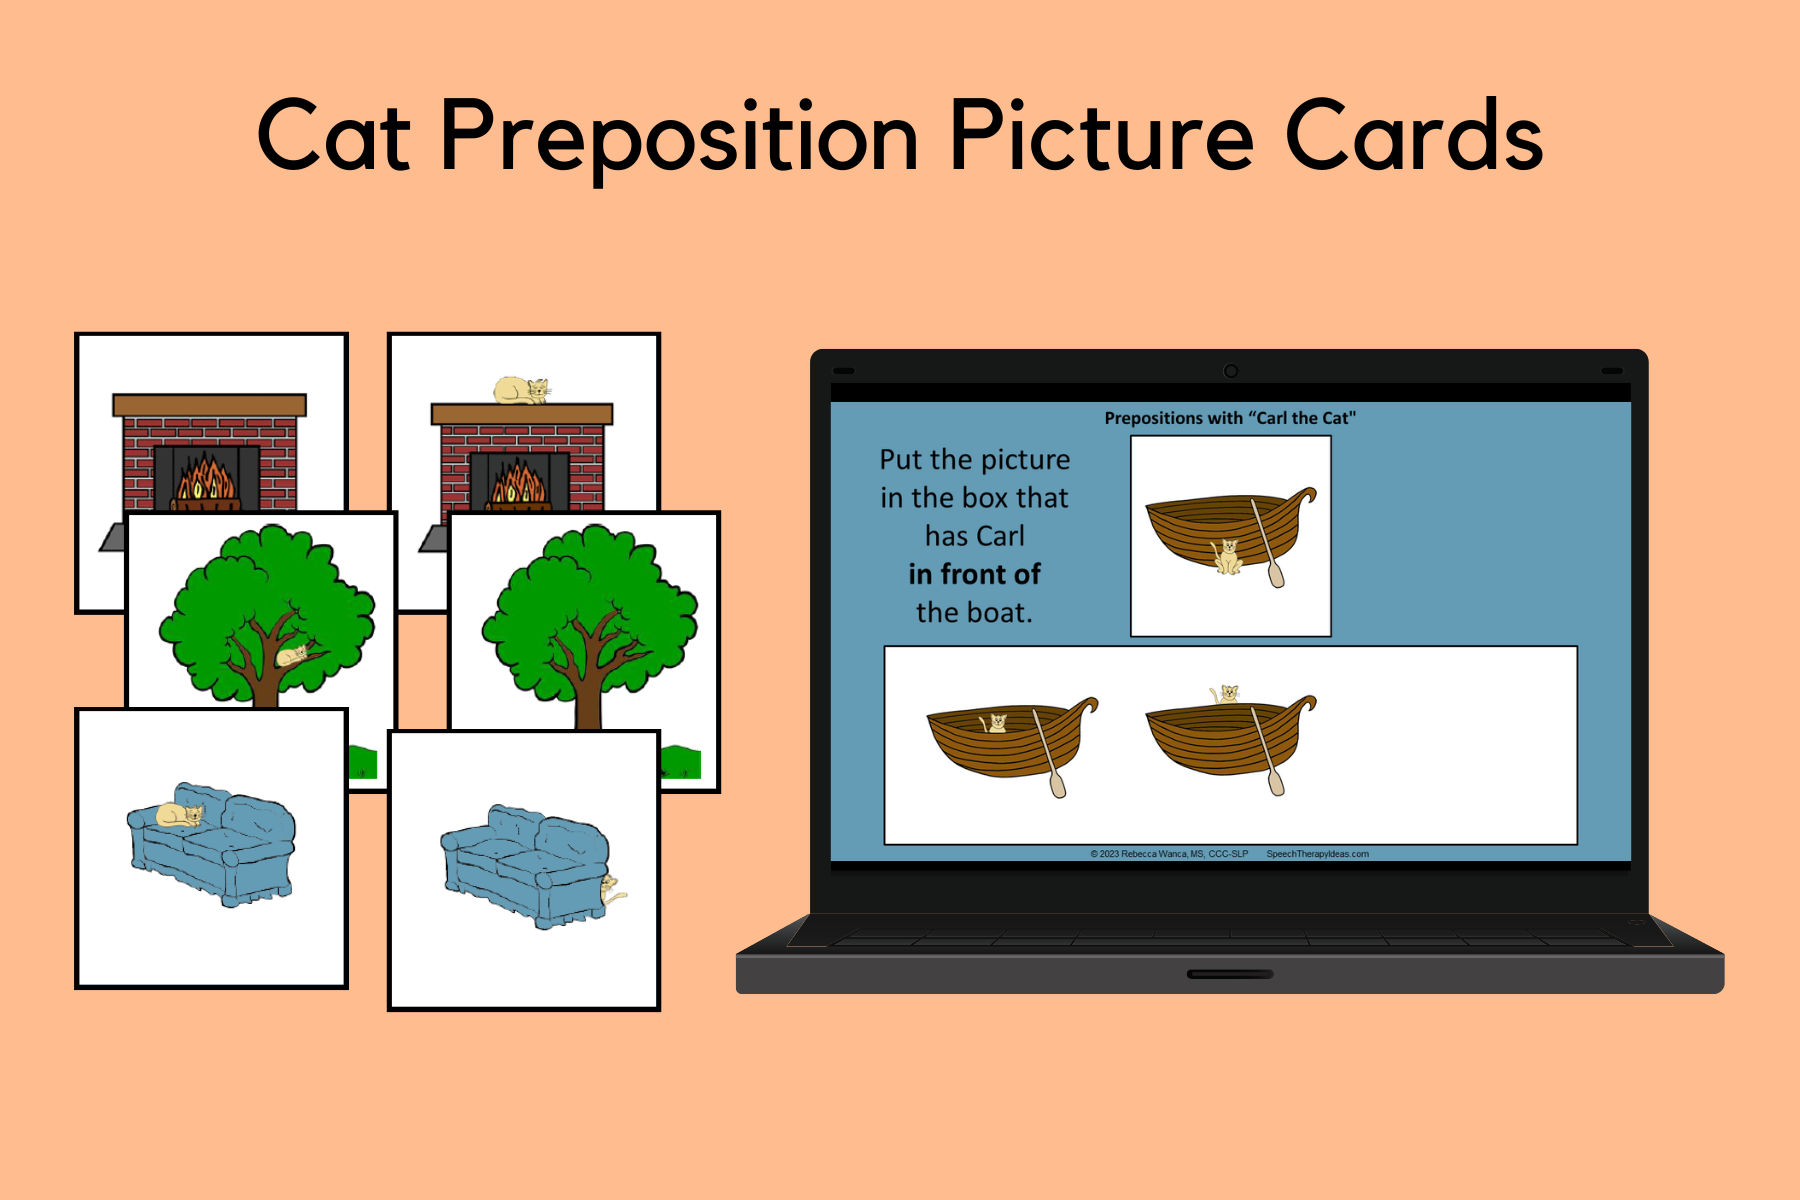 Cat Preposition Picture Cards